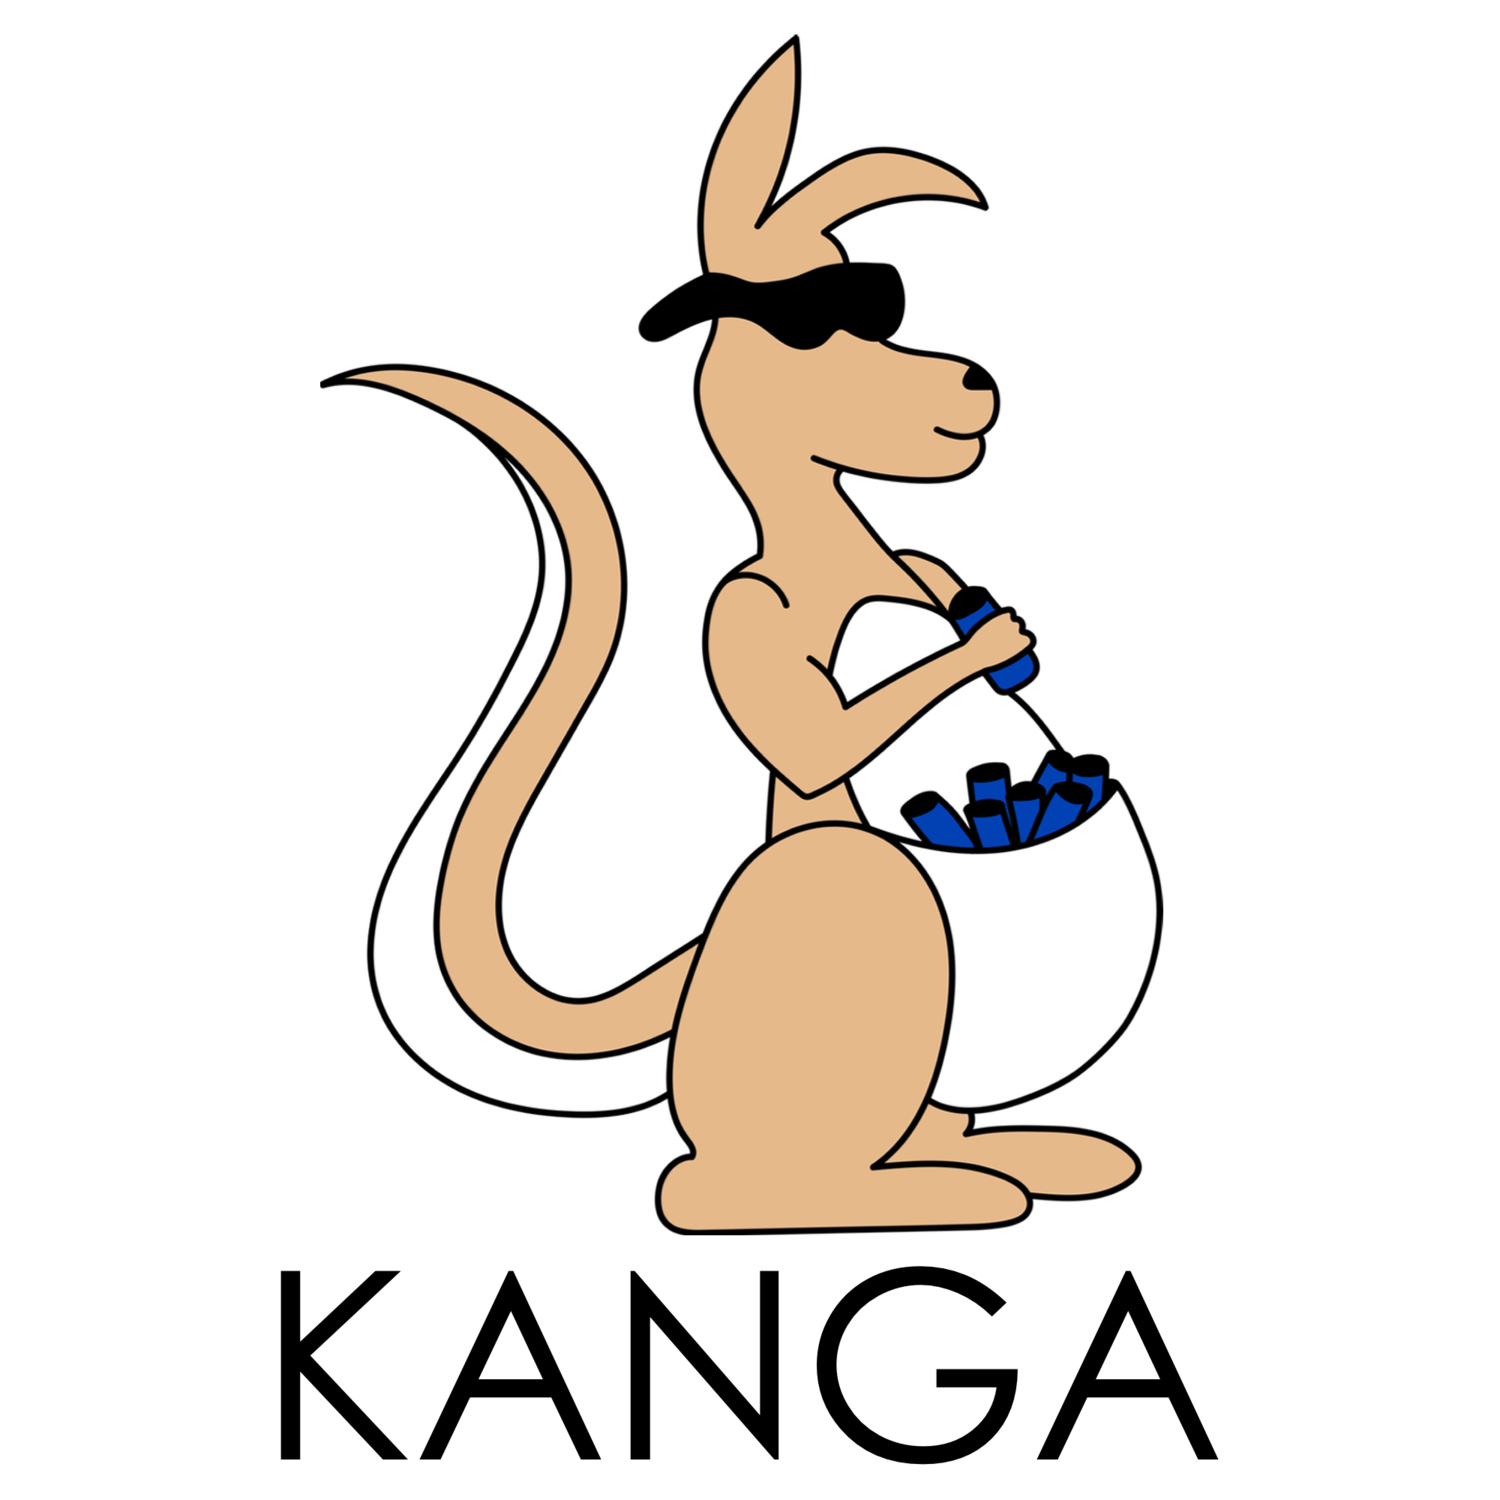 Kangaroo clipart cartoon character. Kanga image group 